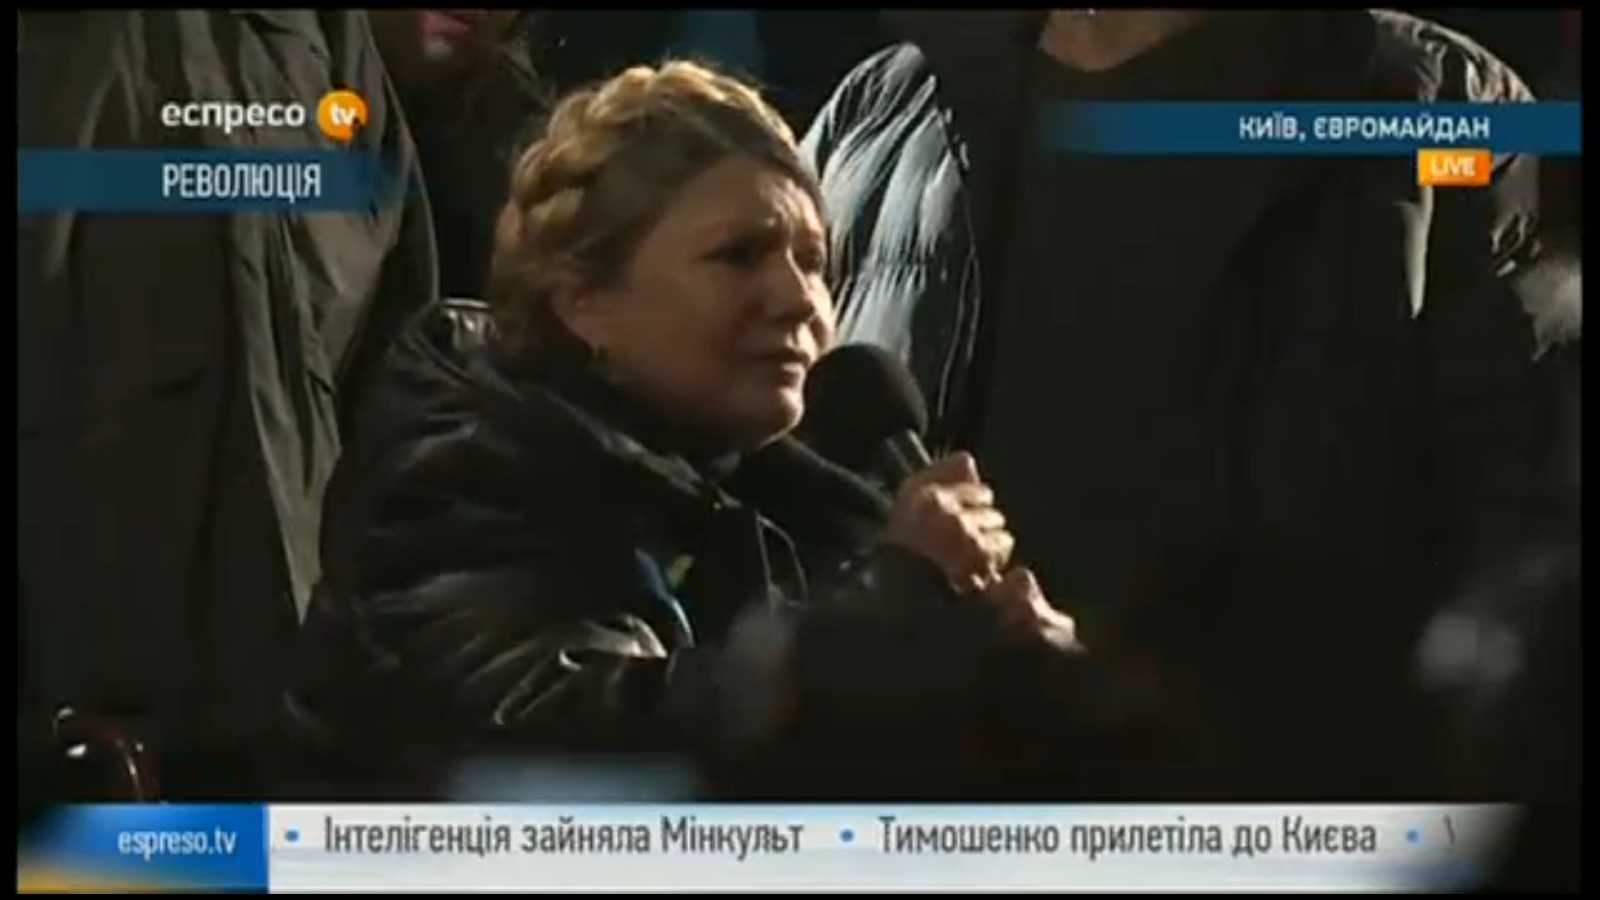 Ucraina are un presedinte interimar: Aleksandr Turcinov. Ce i-a spus Angela Merkel la telefon Iuliei Timosenko - Imaginea 24